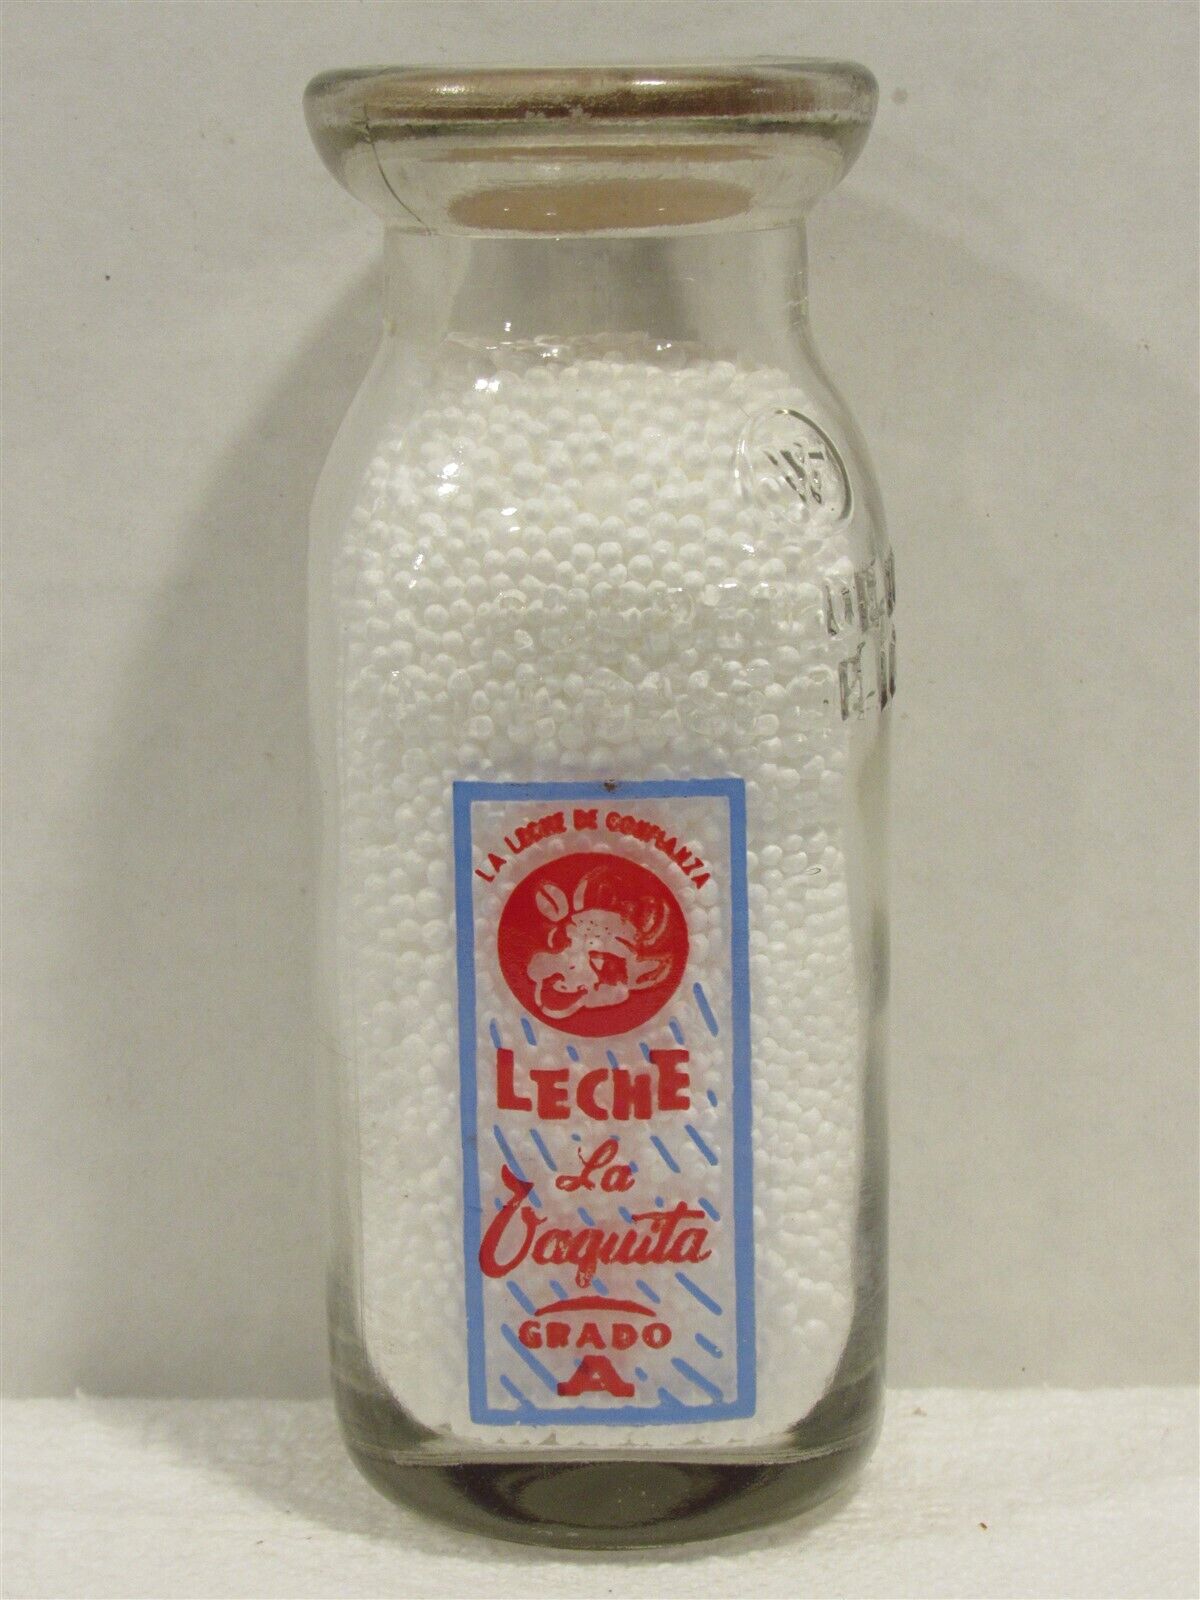 TSPHP Milk Bottle Leche La Vaquita Grado A La Base De La Corona Guerrero Mexico